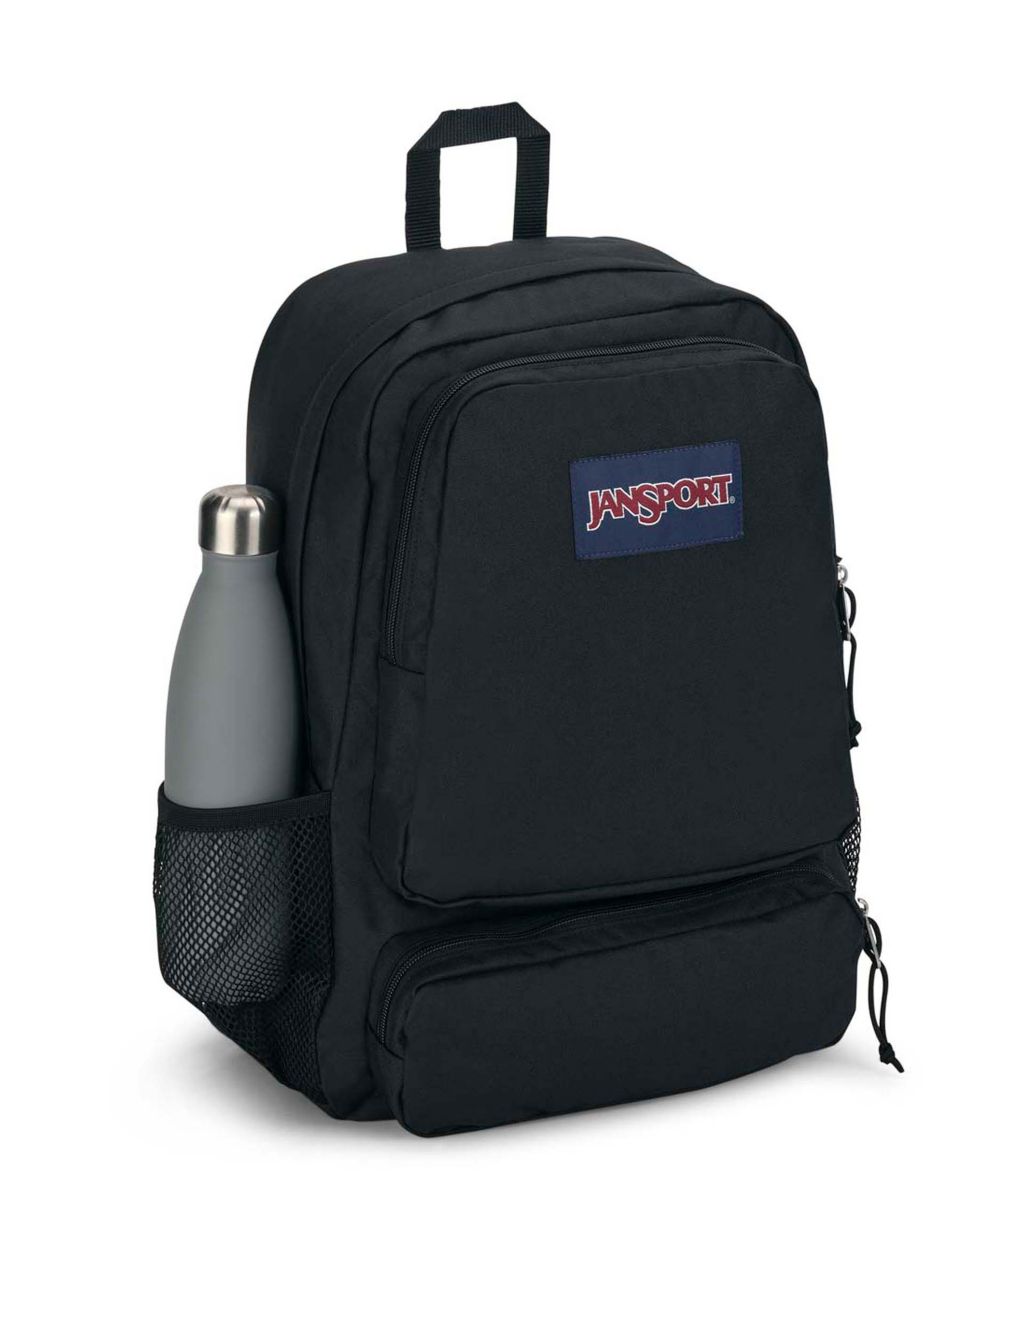 Doubleton Multi Pocket Backpack 4 of 8